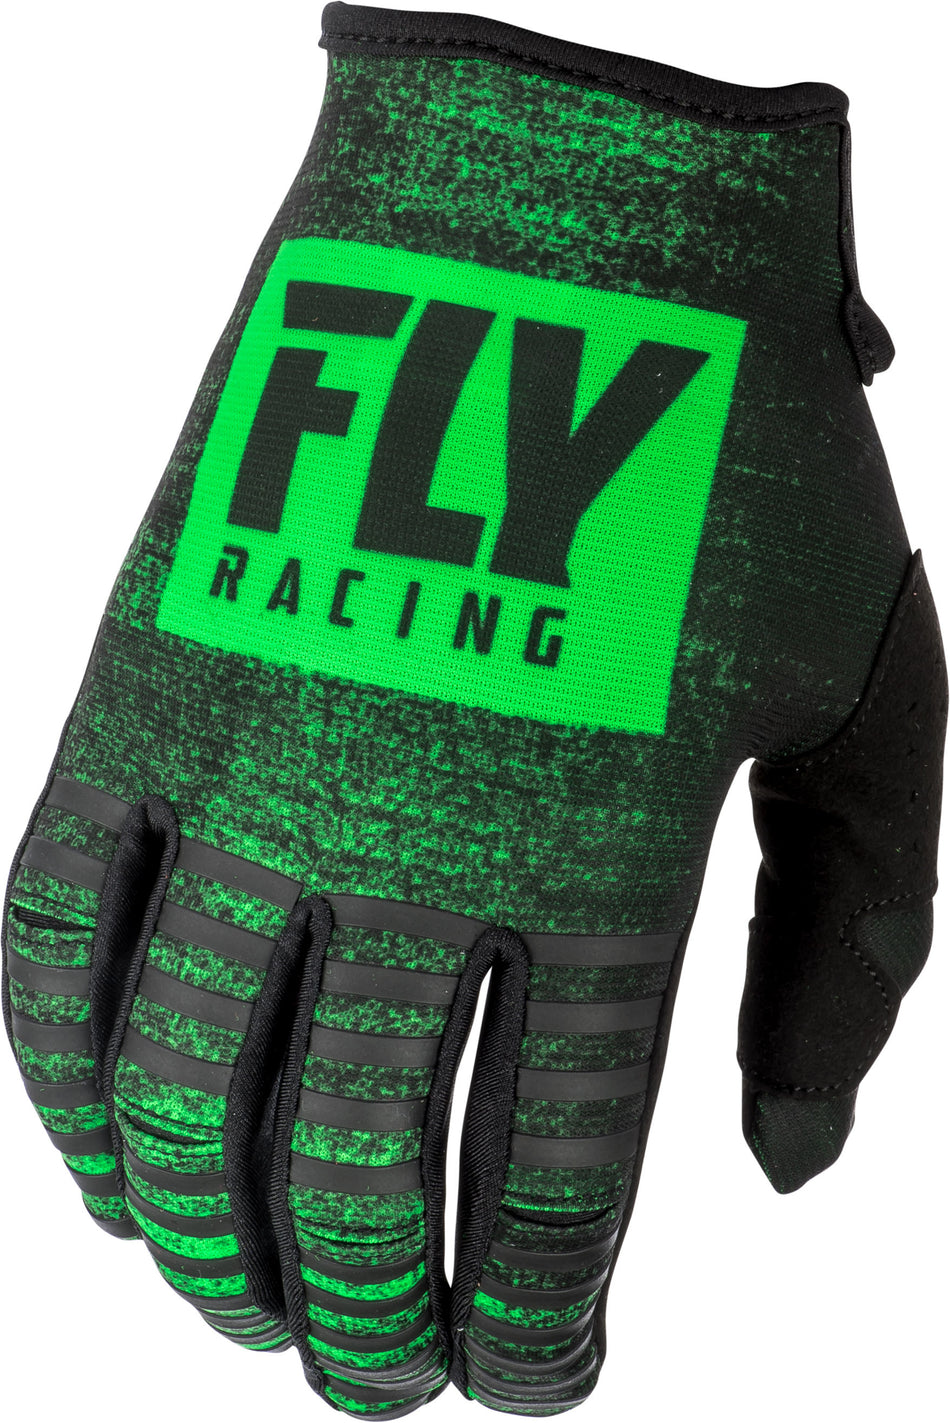 FLY RACING Kinetic Noiz Gloves Neon Green/Black Sz 09 372-51509